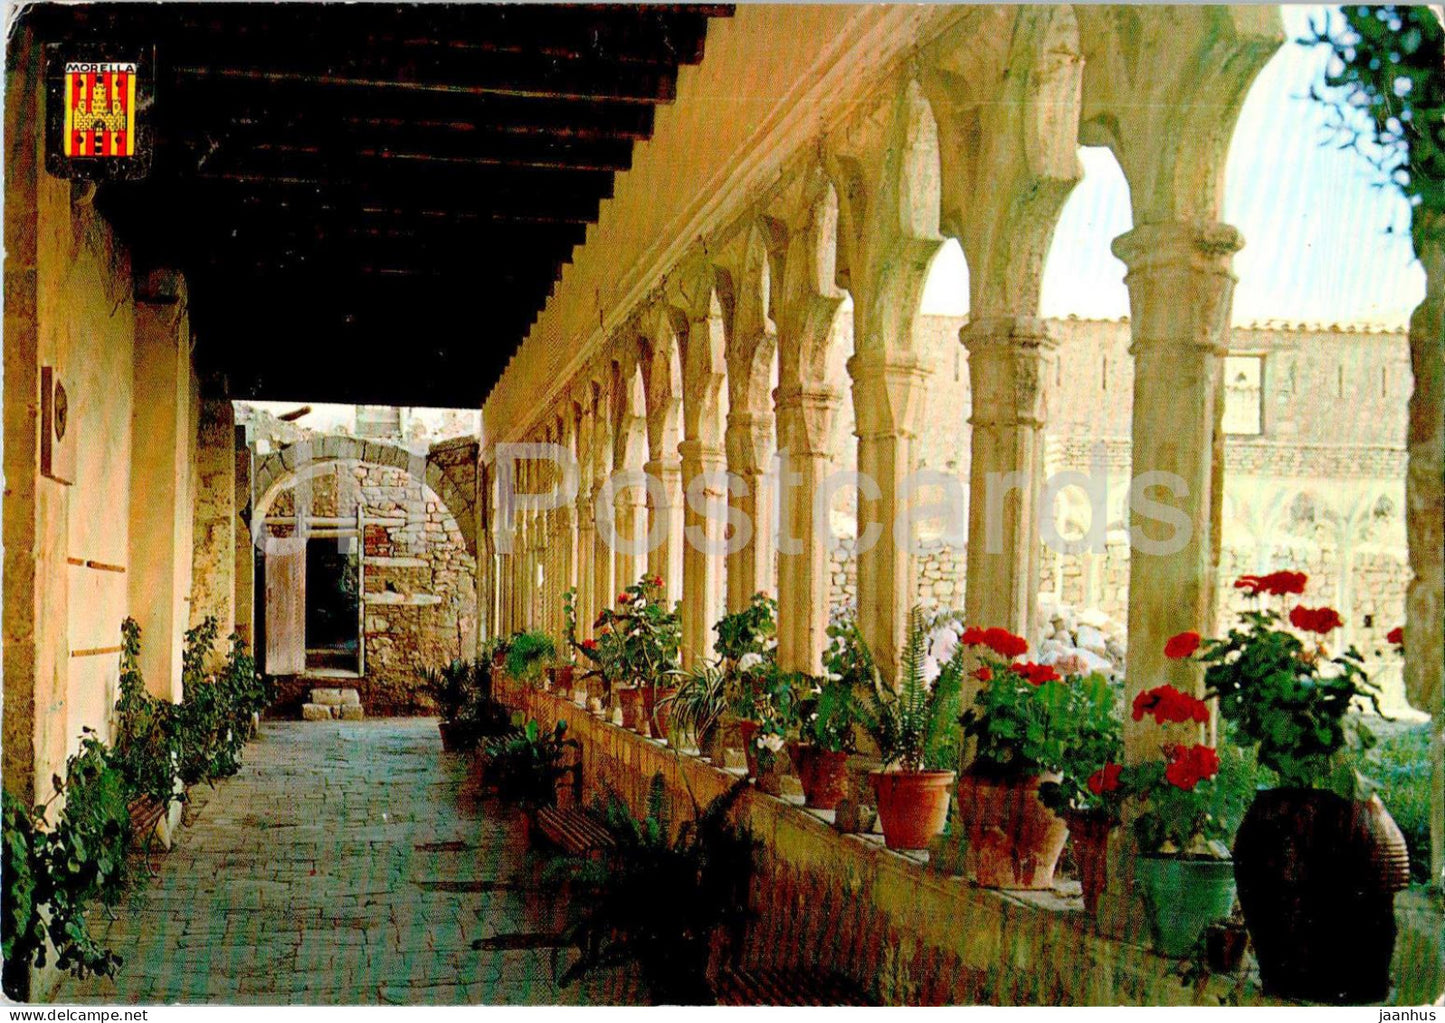 Morella - Convento de San Francisco . Claustro - Monastery - Cloister - 16 - Spain - used - JH Postcards